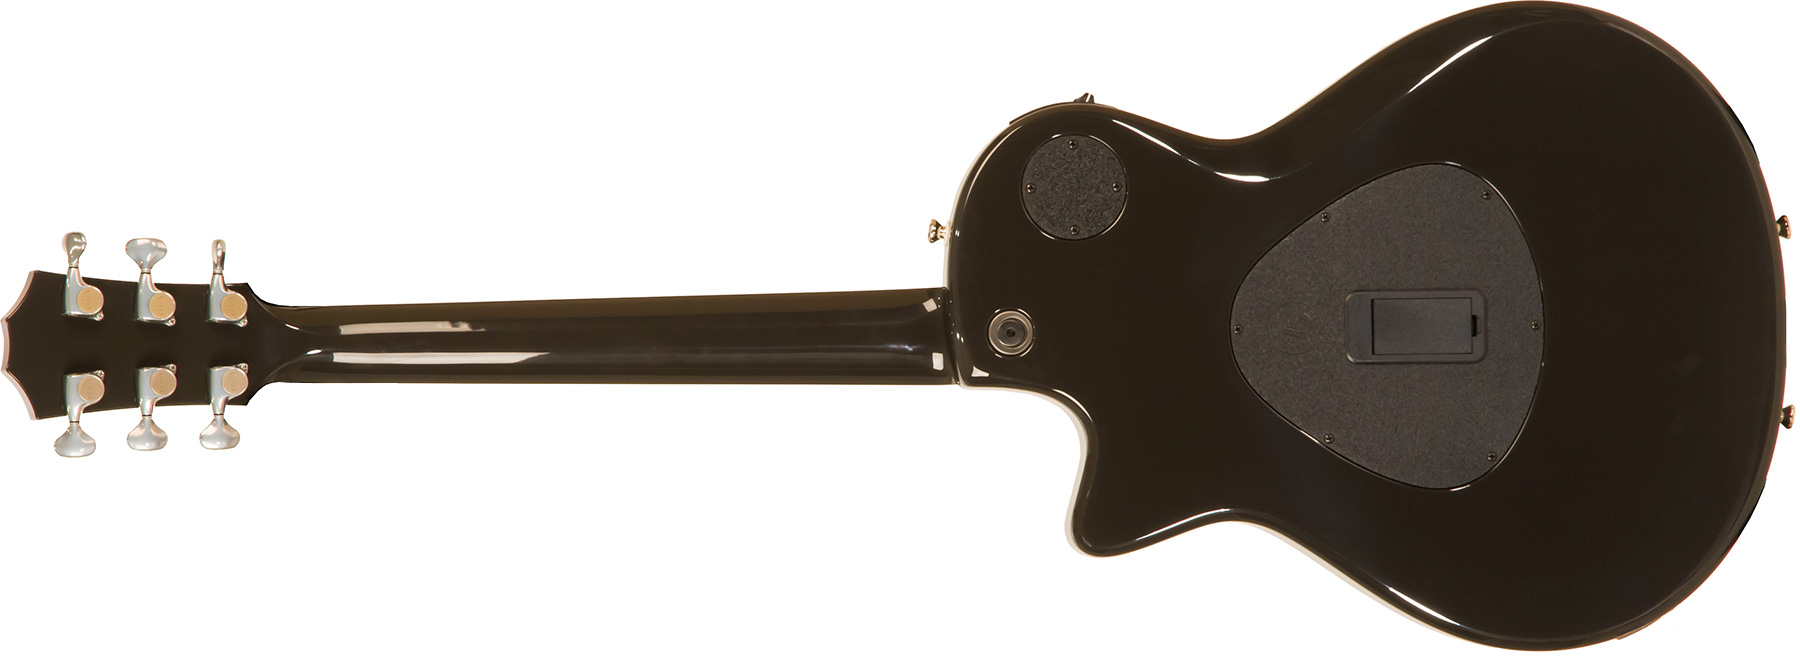 Taylor T5z Ltd Cw Quilt Maple Top Sapele Eb - Shark Gray - Semi-hollow electric guitar - Variation 1